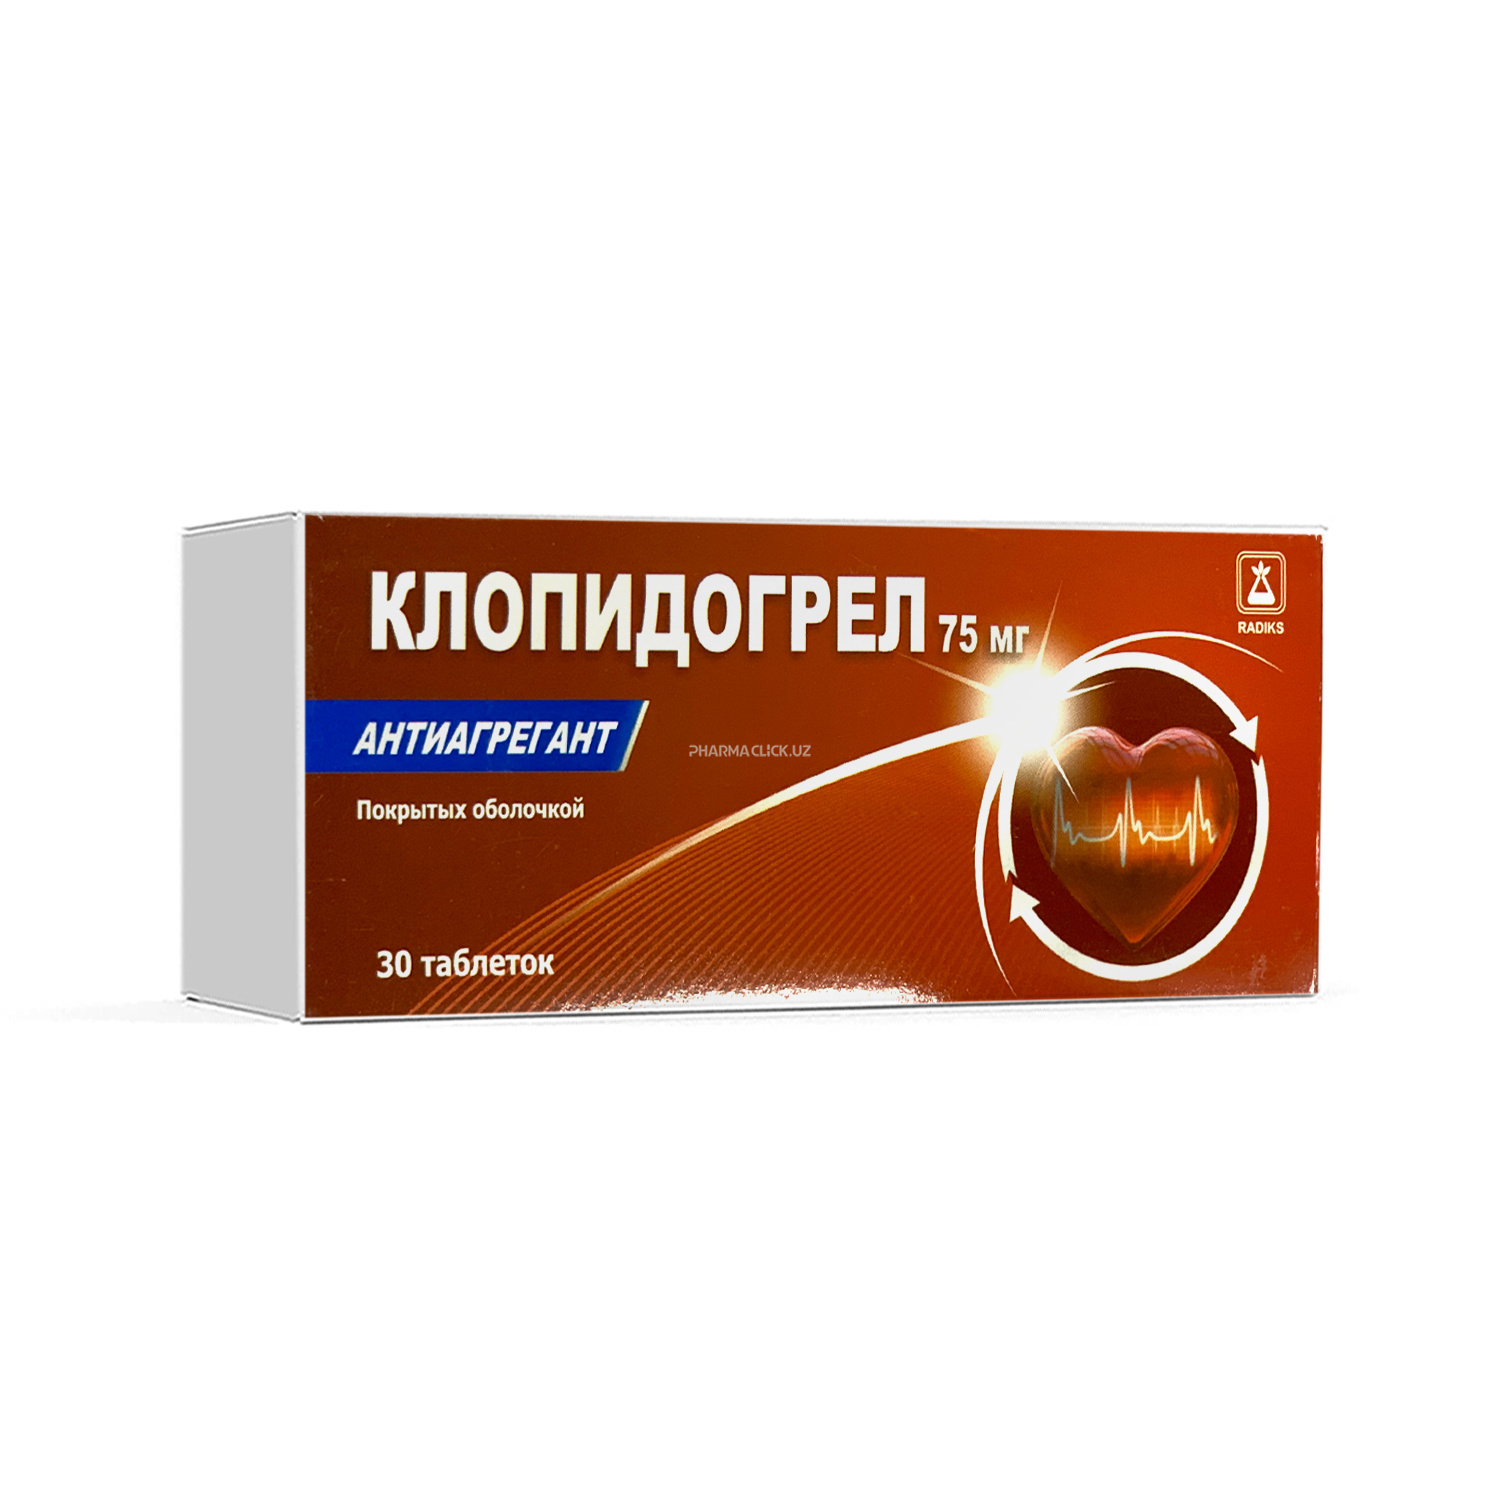 Klopidogrel tab. 75 mg №30